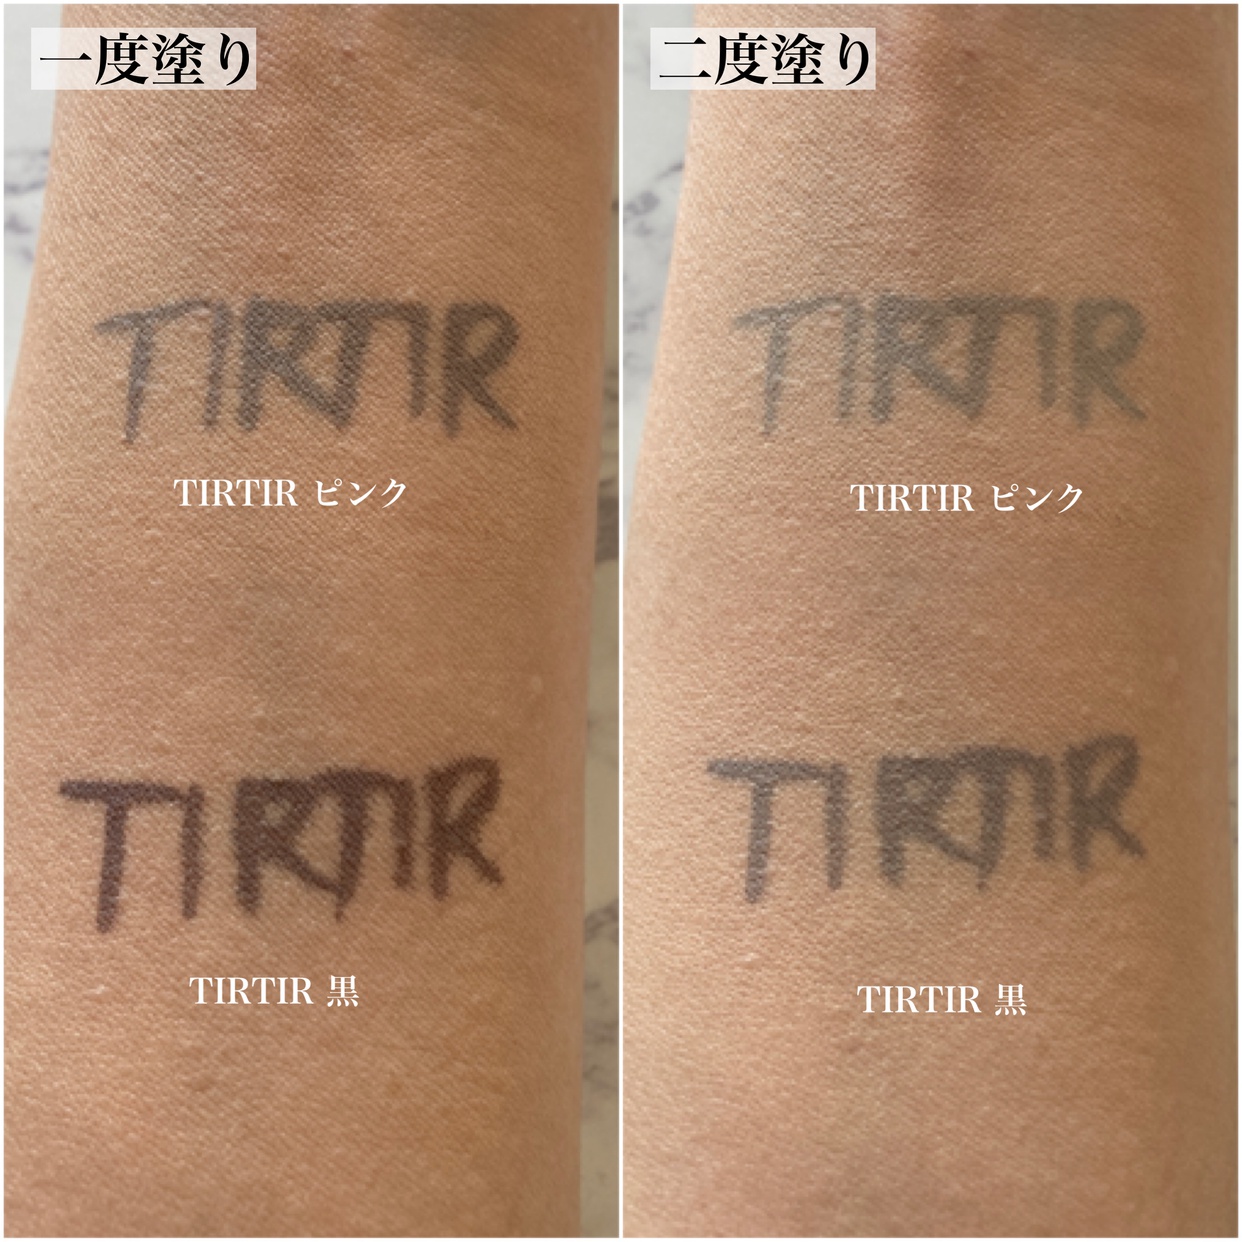 TIRTIR(ティルティル) マスク フィット オール カバー クッションを使ったみゆさんのクチコミ画像4